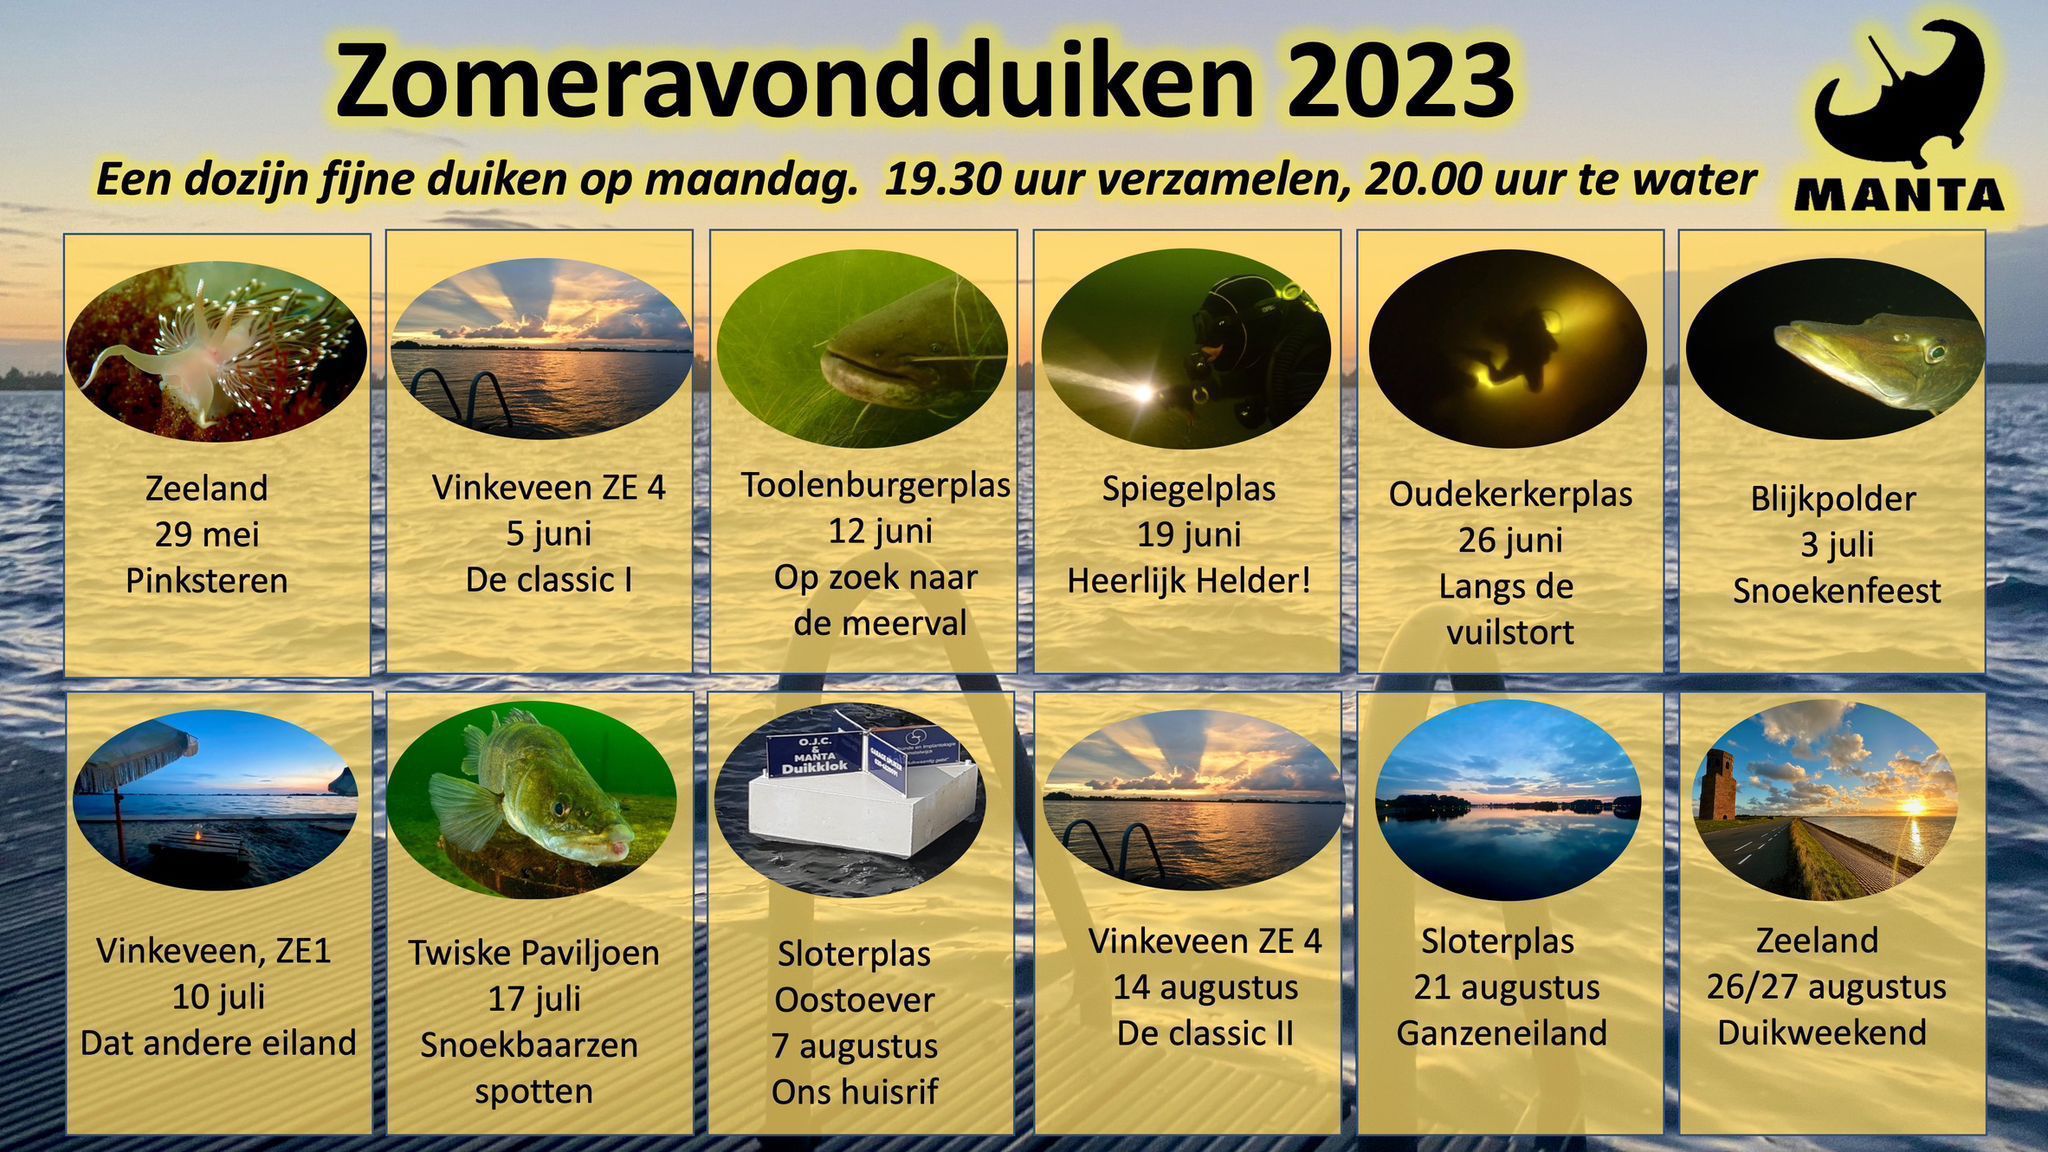 Zomeravondduiken 2023 - Sloterplas Oostoever